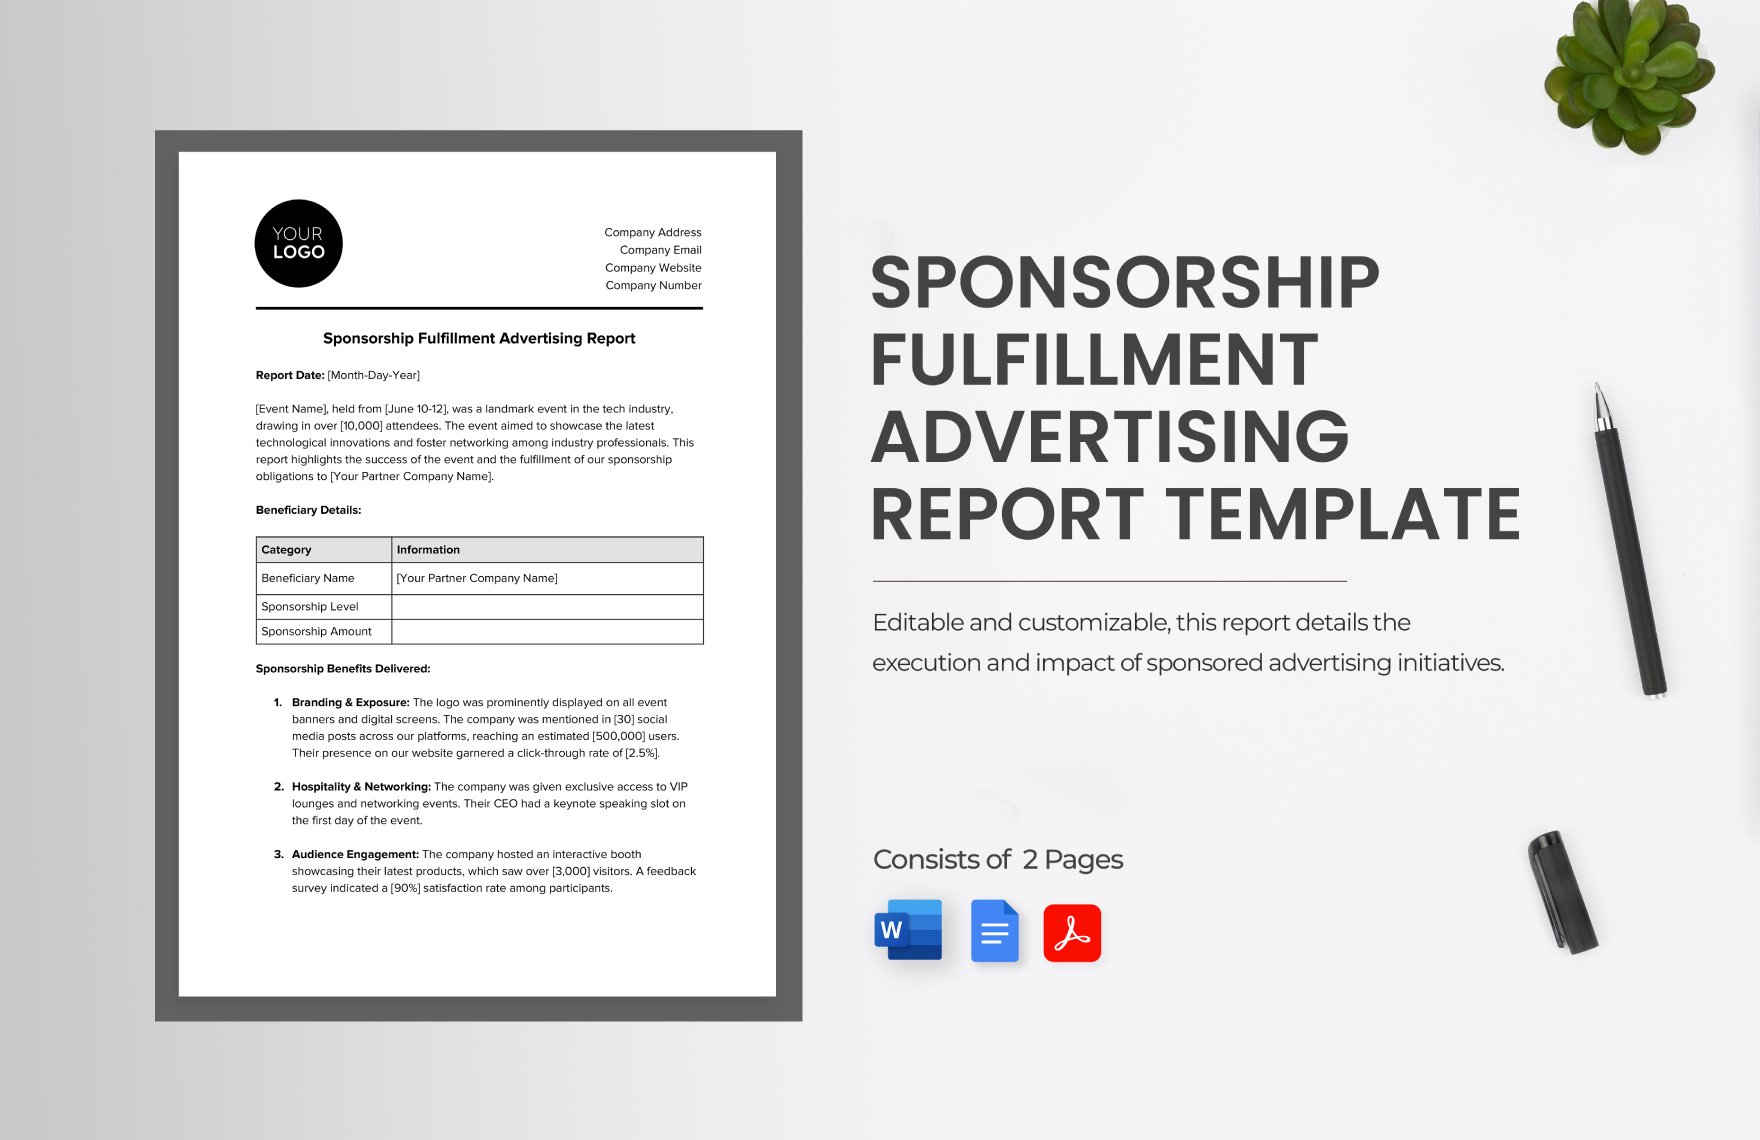 Free Sponsorship Fulfillment Advertising Report Template in Word, Google Docs, PDF